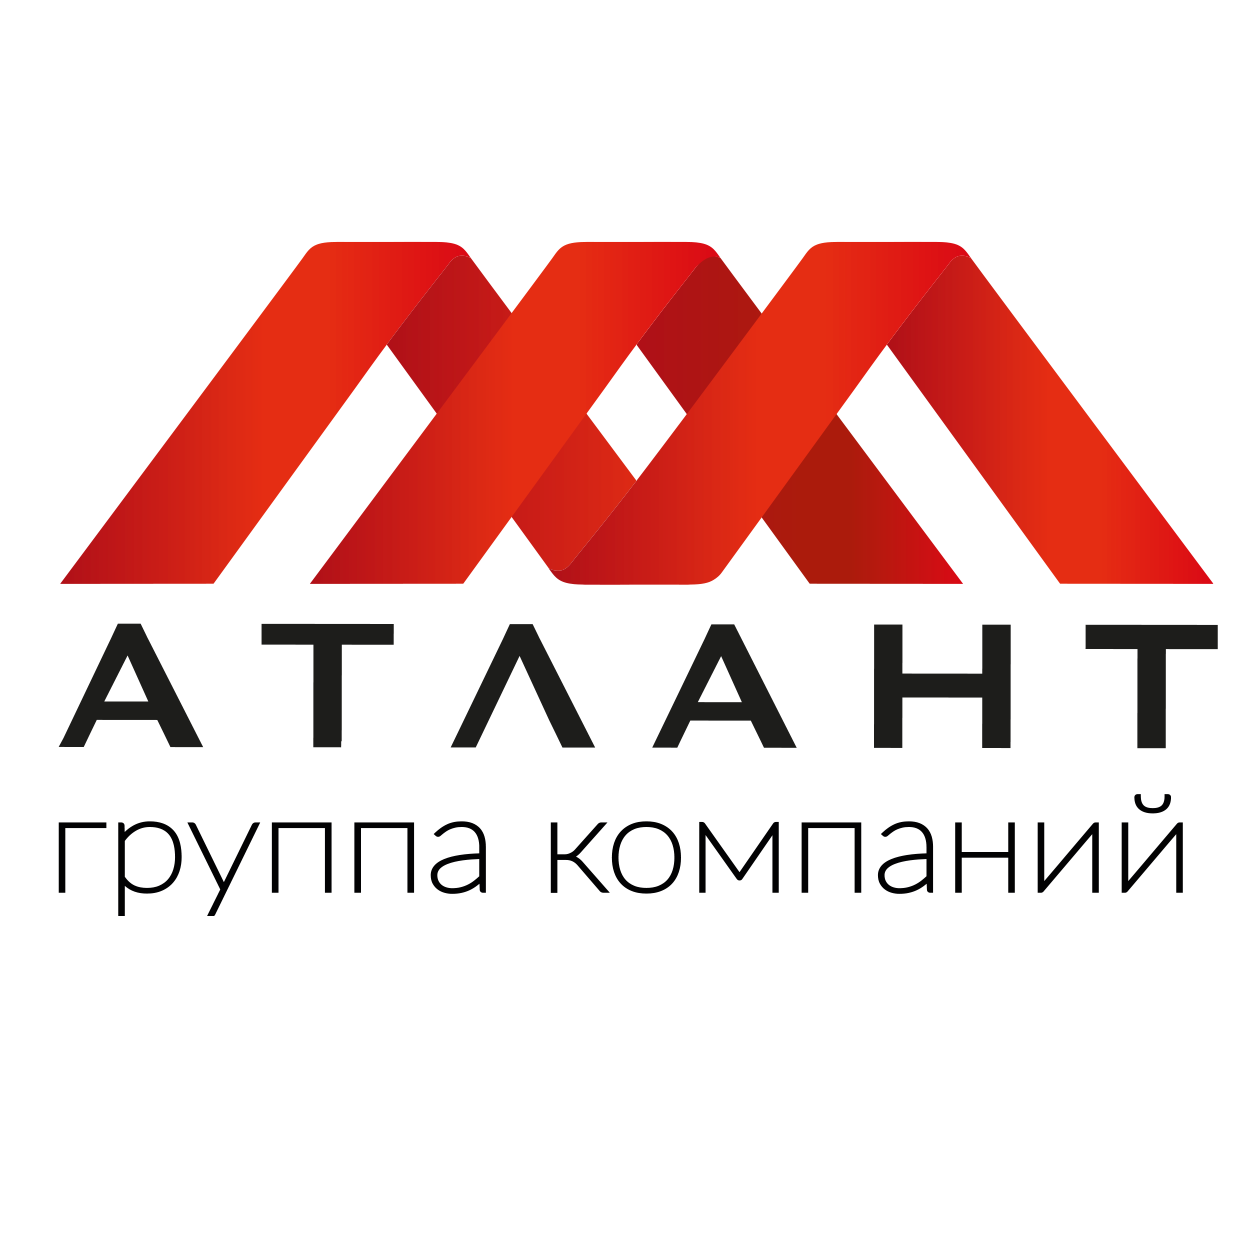 Фото / логотип СК Атлант, Краснодар